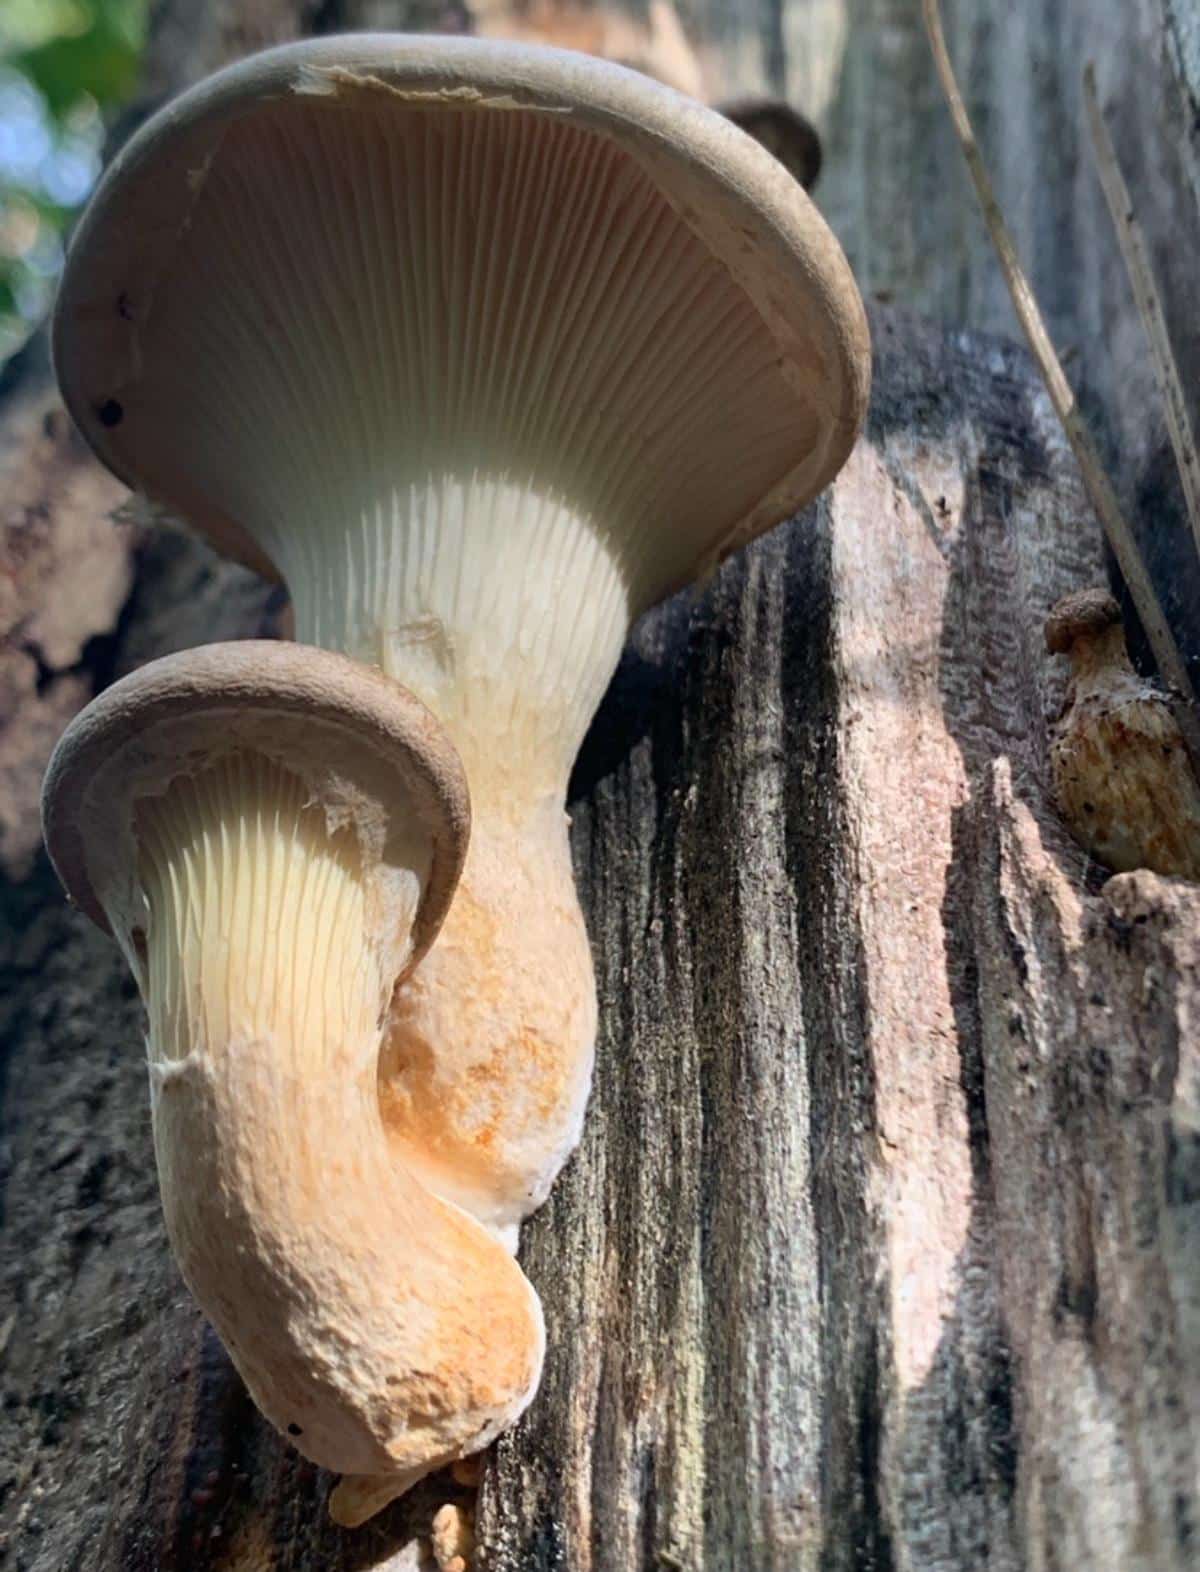 veiled oyster mushroom
